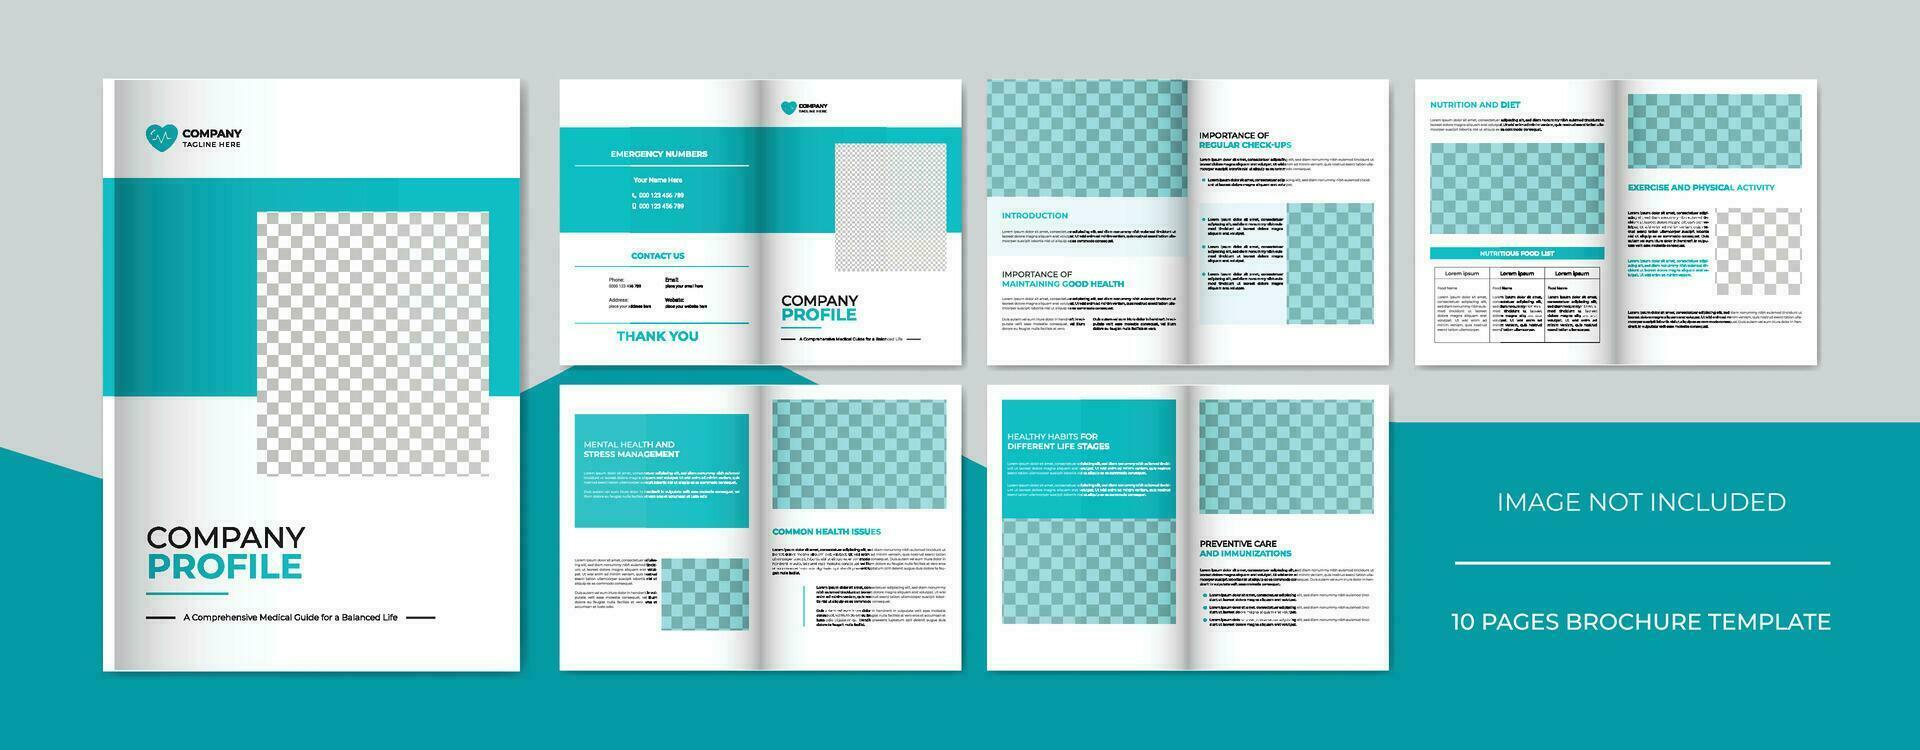 Medical brochure or company profile template, multipurpose brochure template design vector